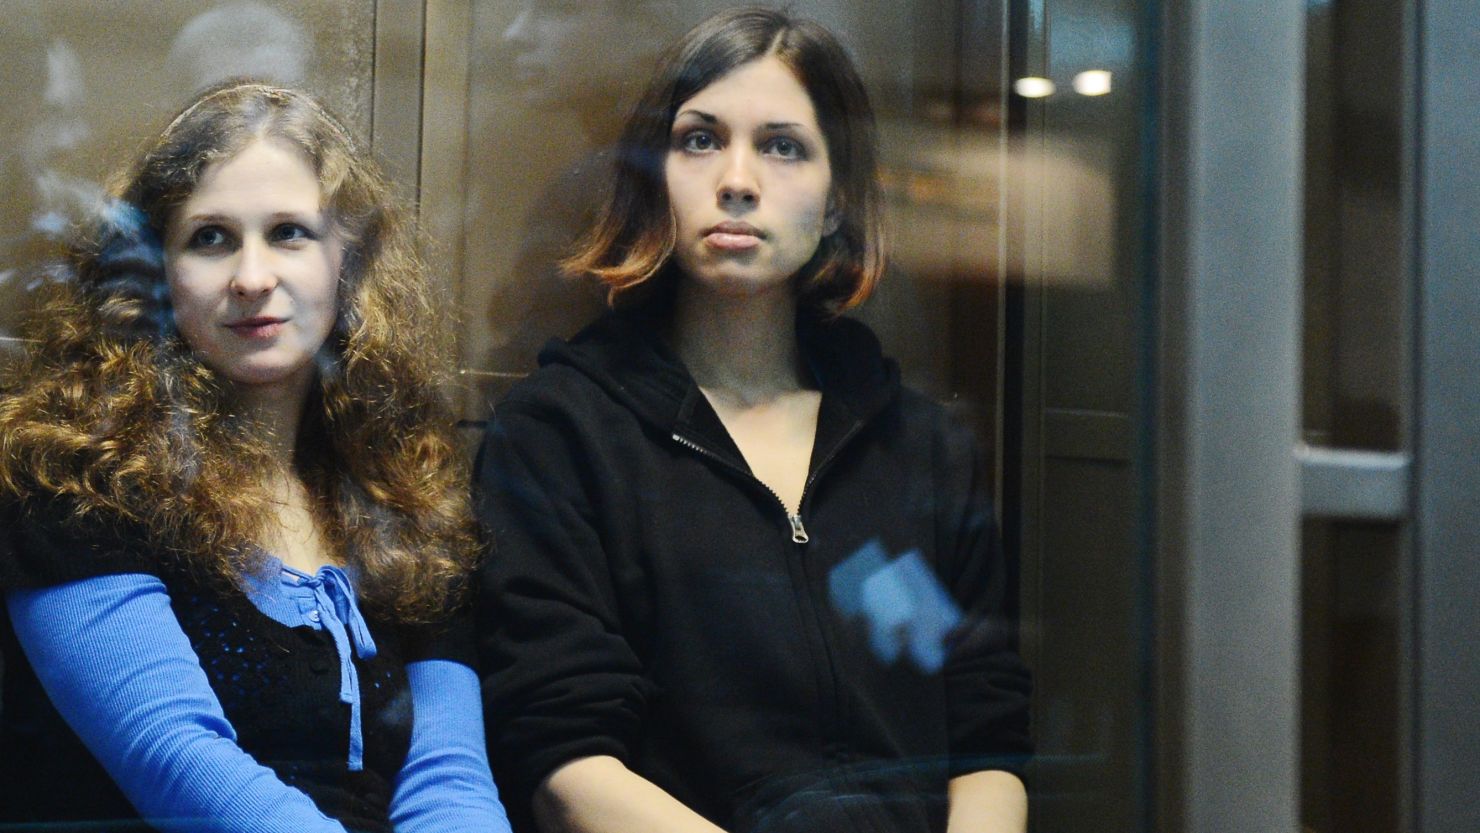 [File photo] Maria Alyokhina (left) and Nadezhda Tolokonnikova sit in court in Moscow on October 10, 2012.